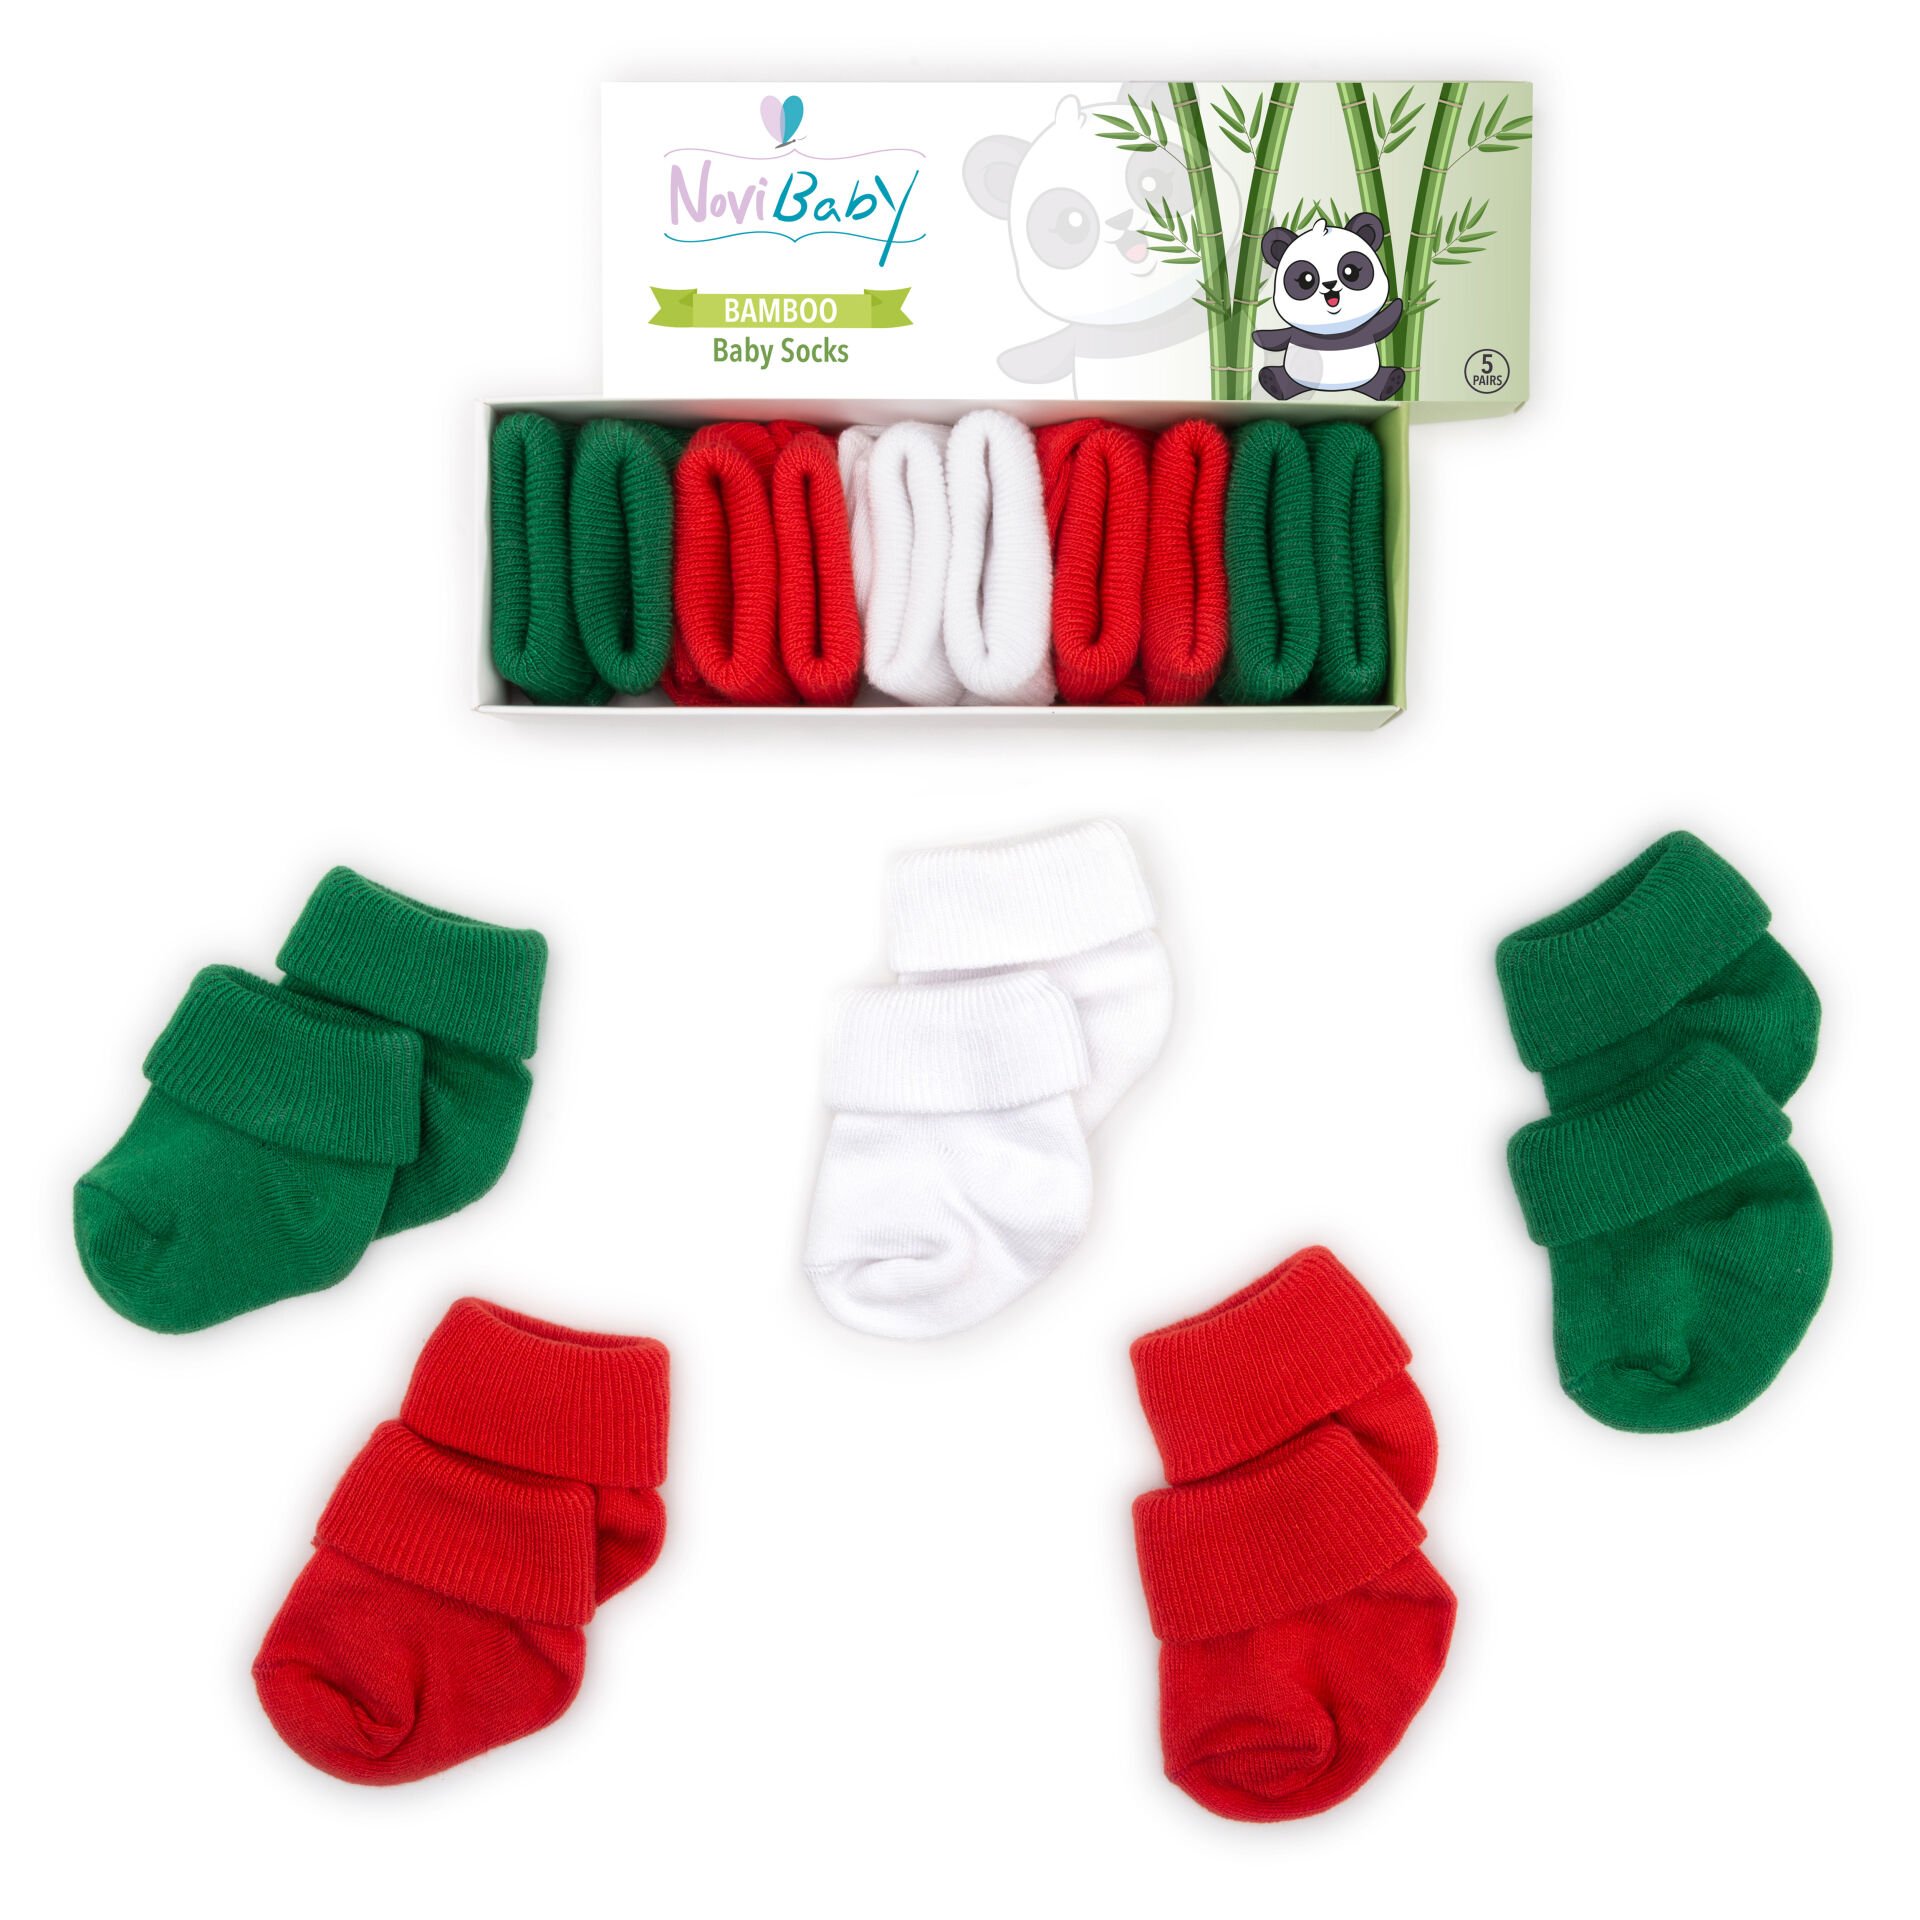 Novibaby 5'li Bambu Bebek Çorap I Christmas I 0-6 ay I Yenidoğan Kız Erkek Bebek Çorabı